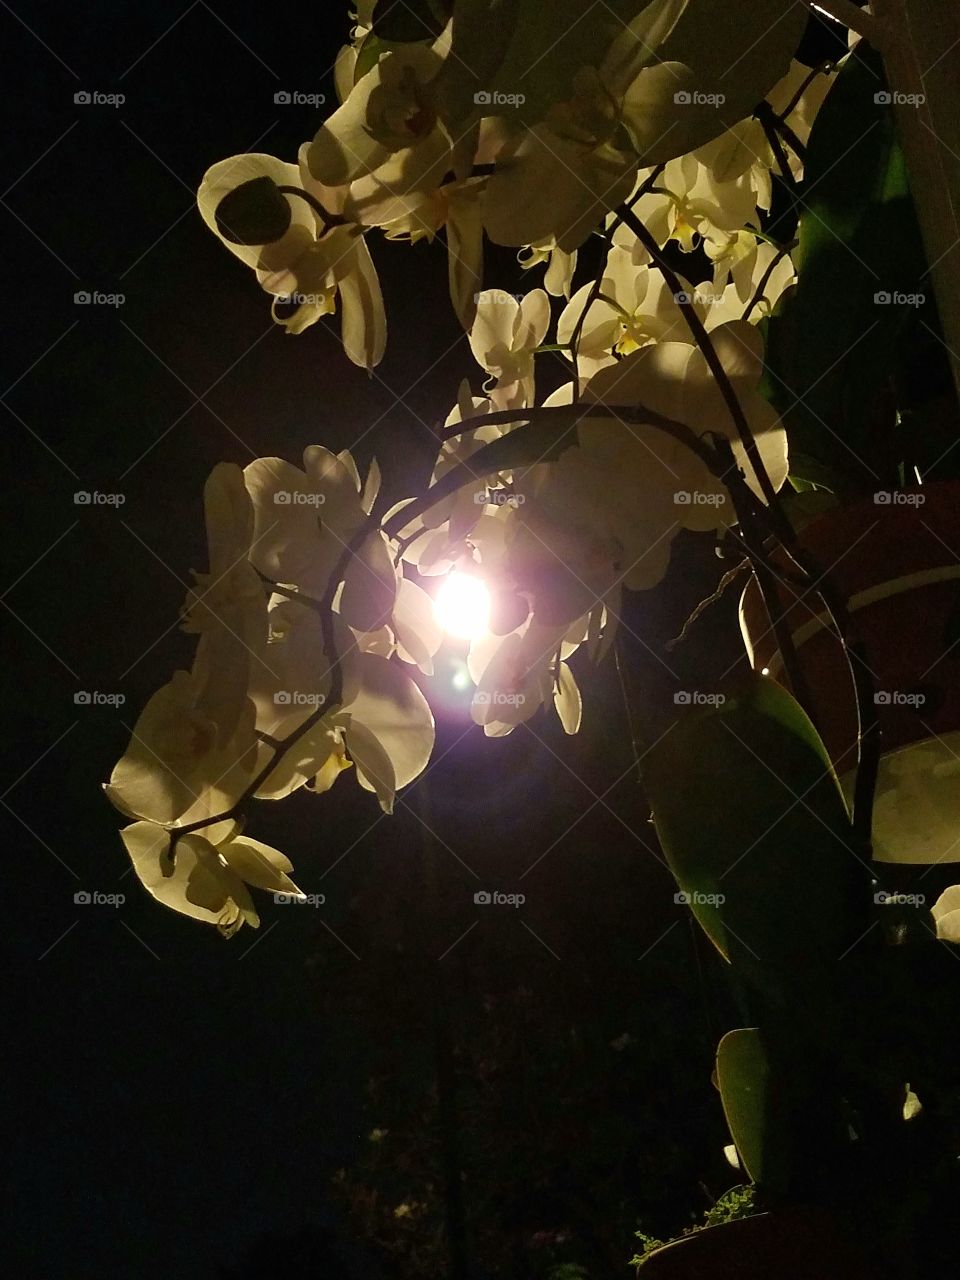 Light Through the Flowers